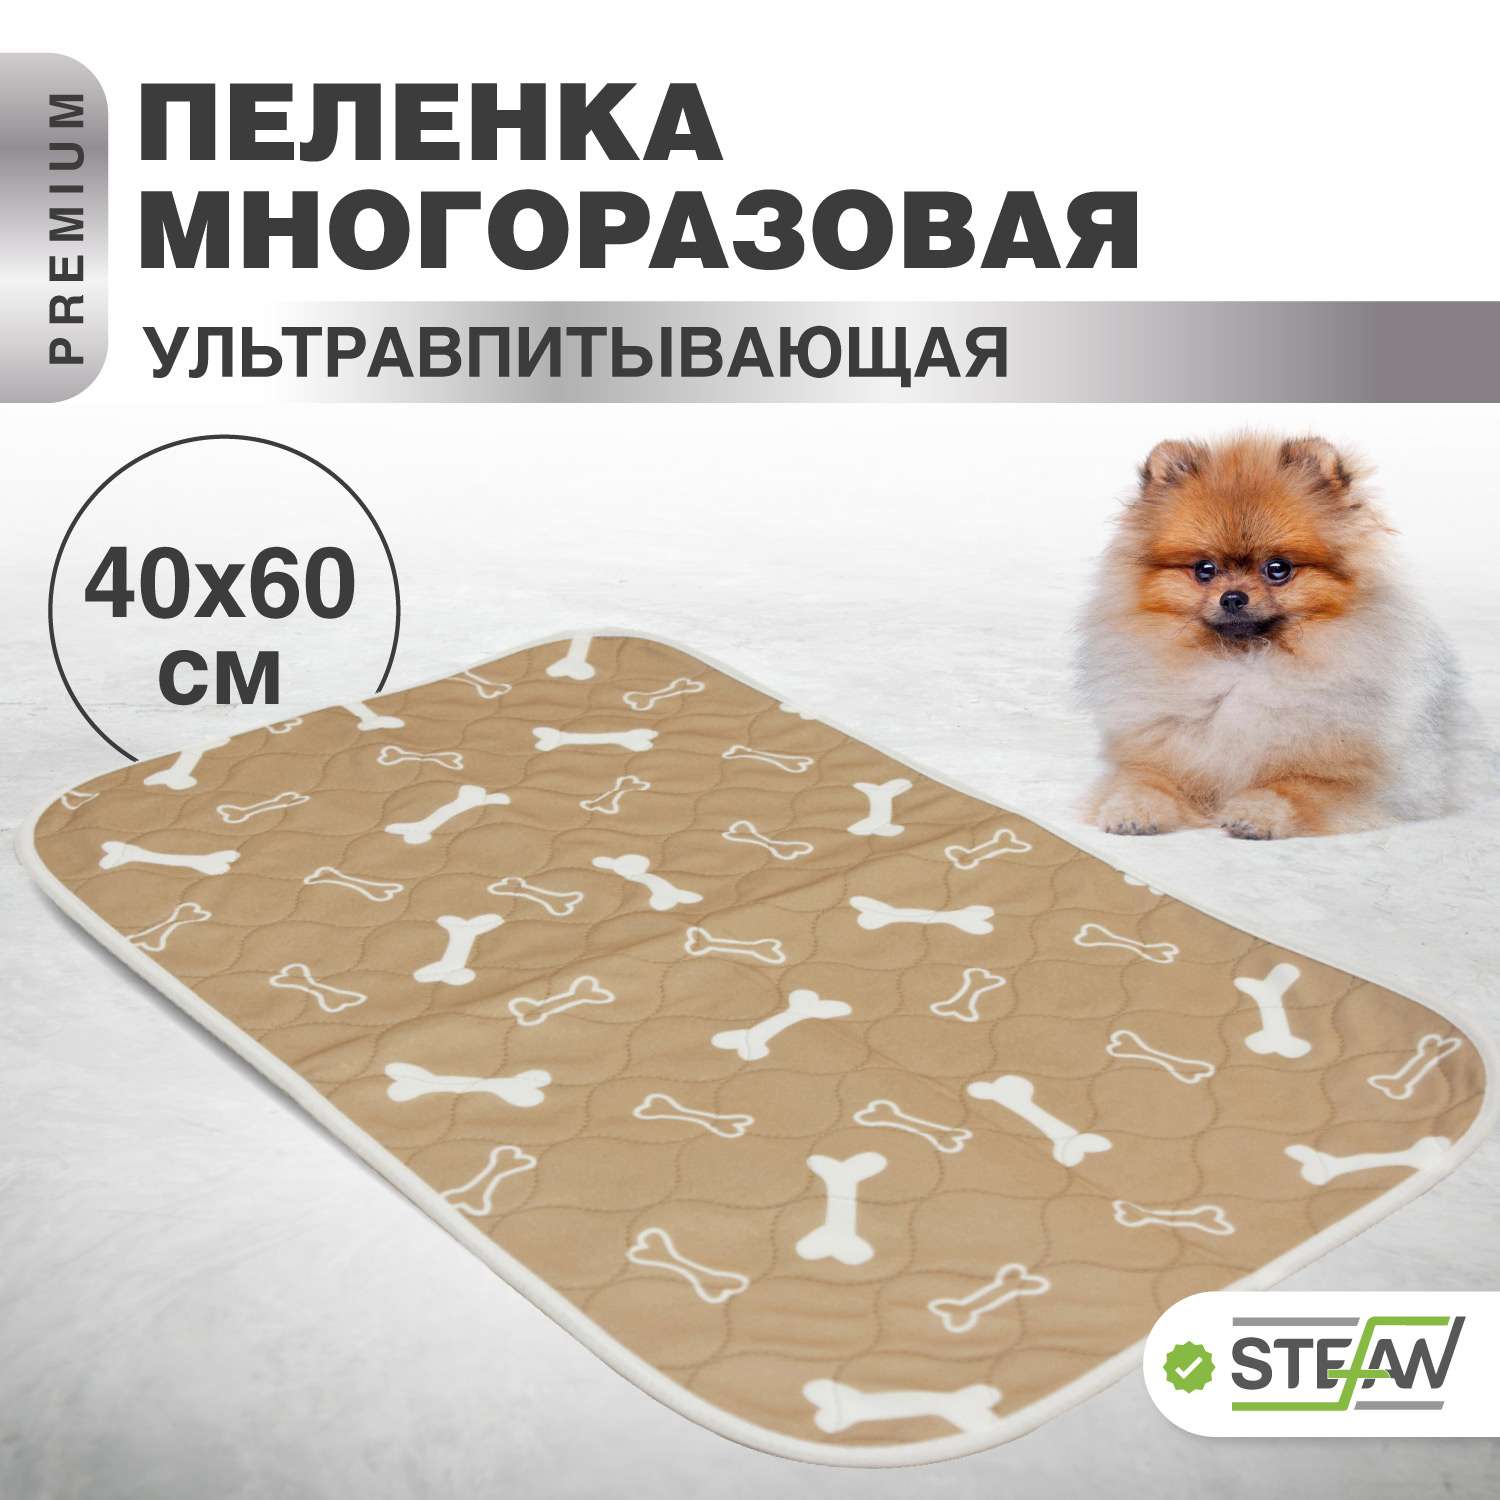 Пеленка для животных Stefan впитывающая многоразовая бежевая 40х60см - фото 1